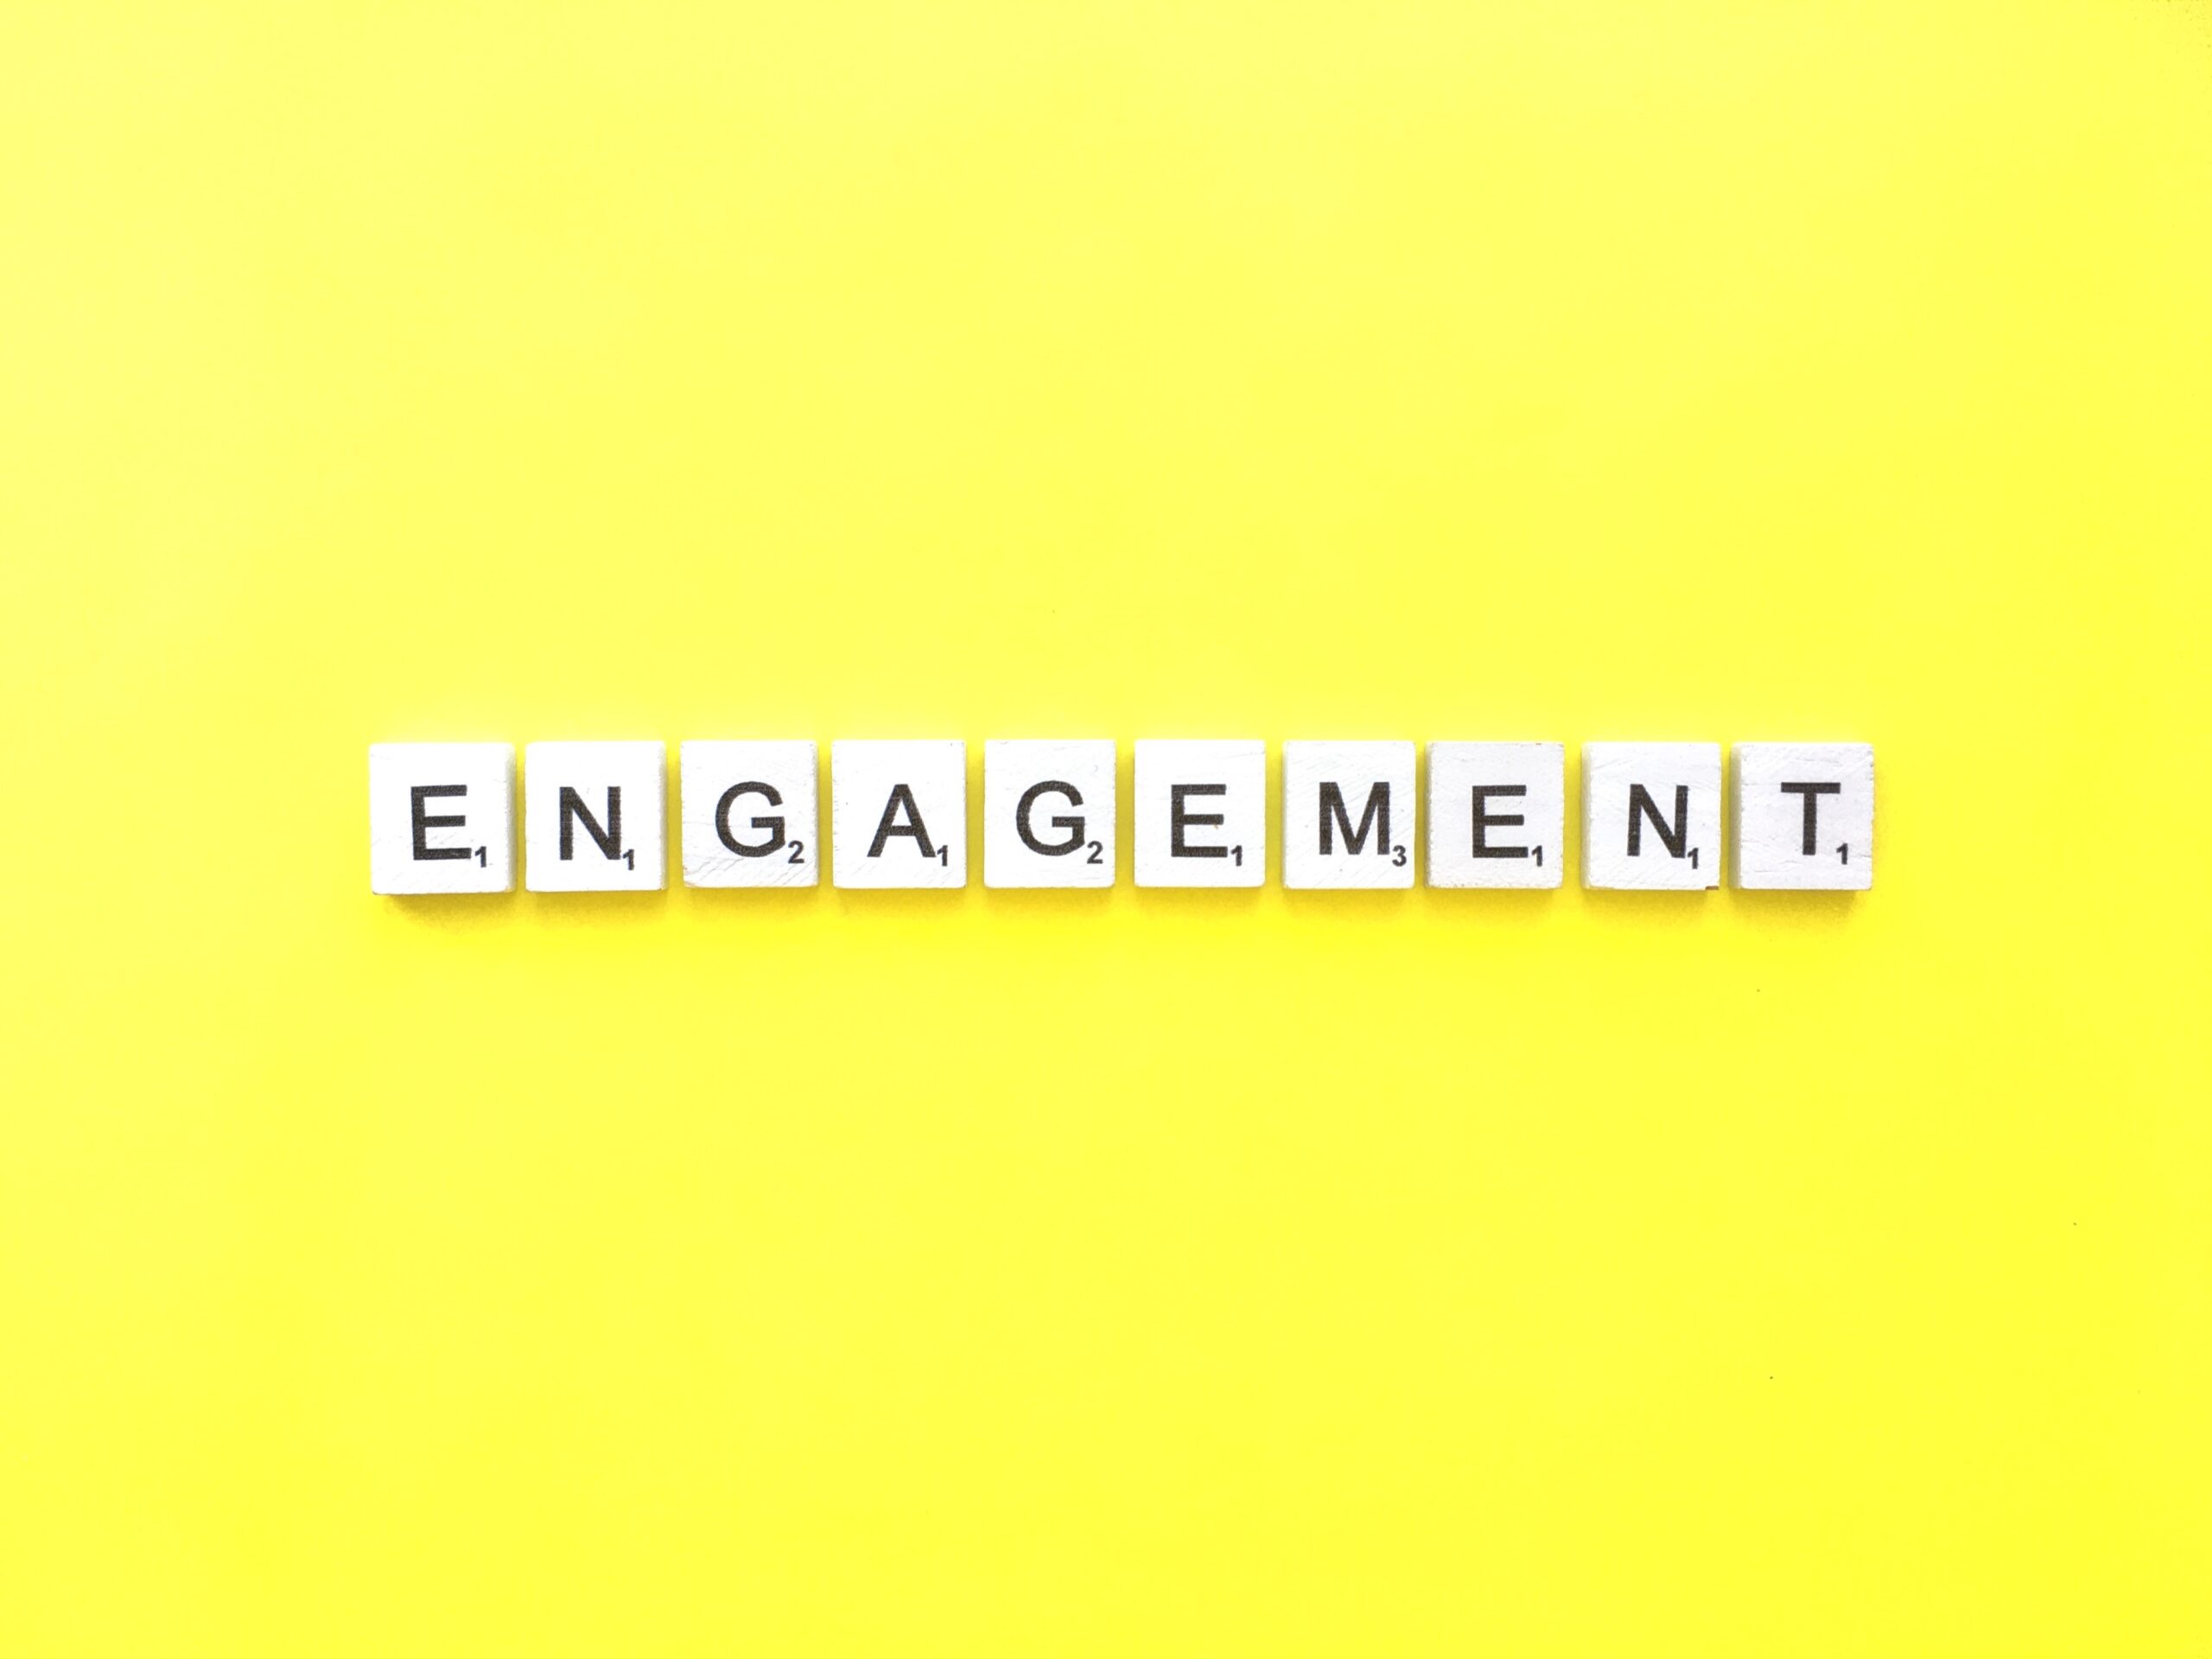 <img src="engagement.jpeg" alt="Engagement-rate">